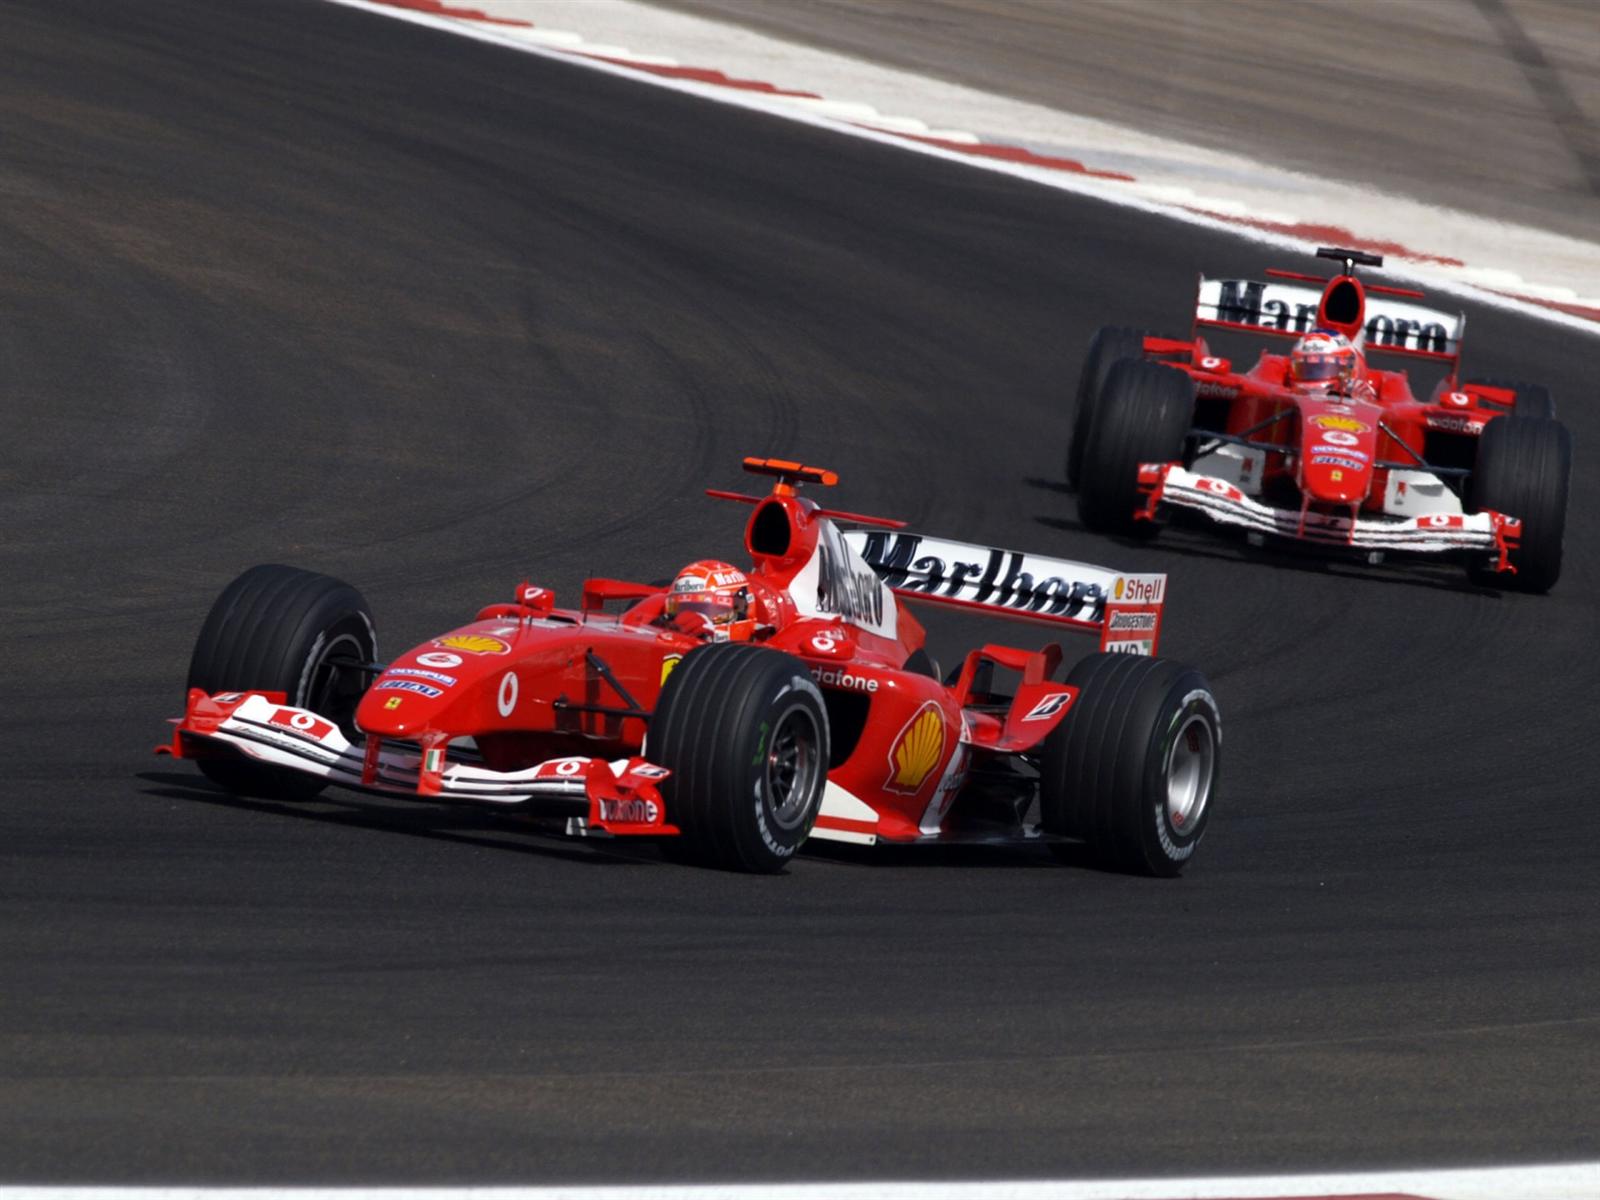 2004-Ferrari-F2004-F1-Image-037-1600